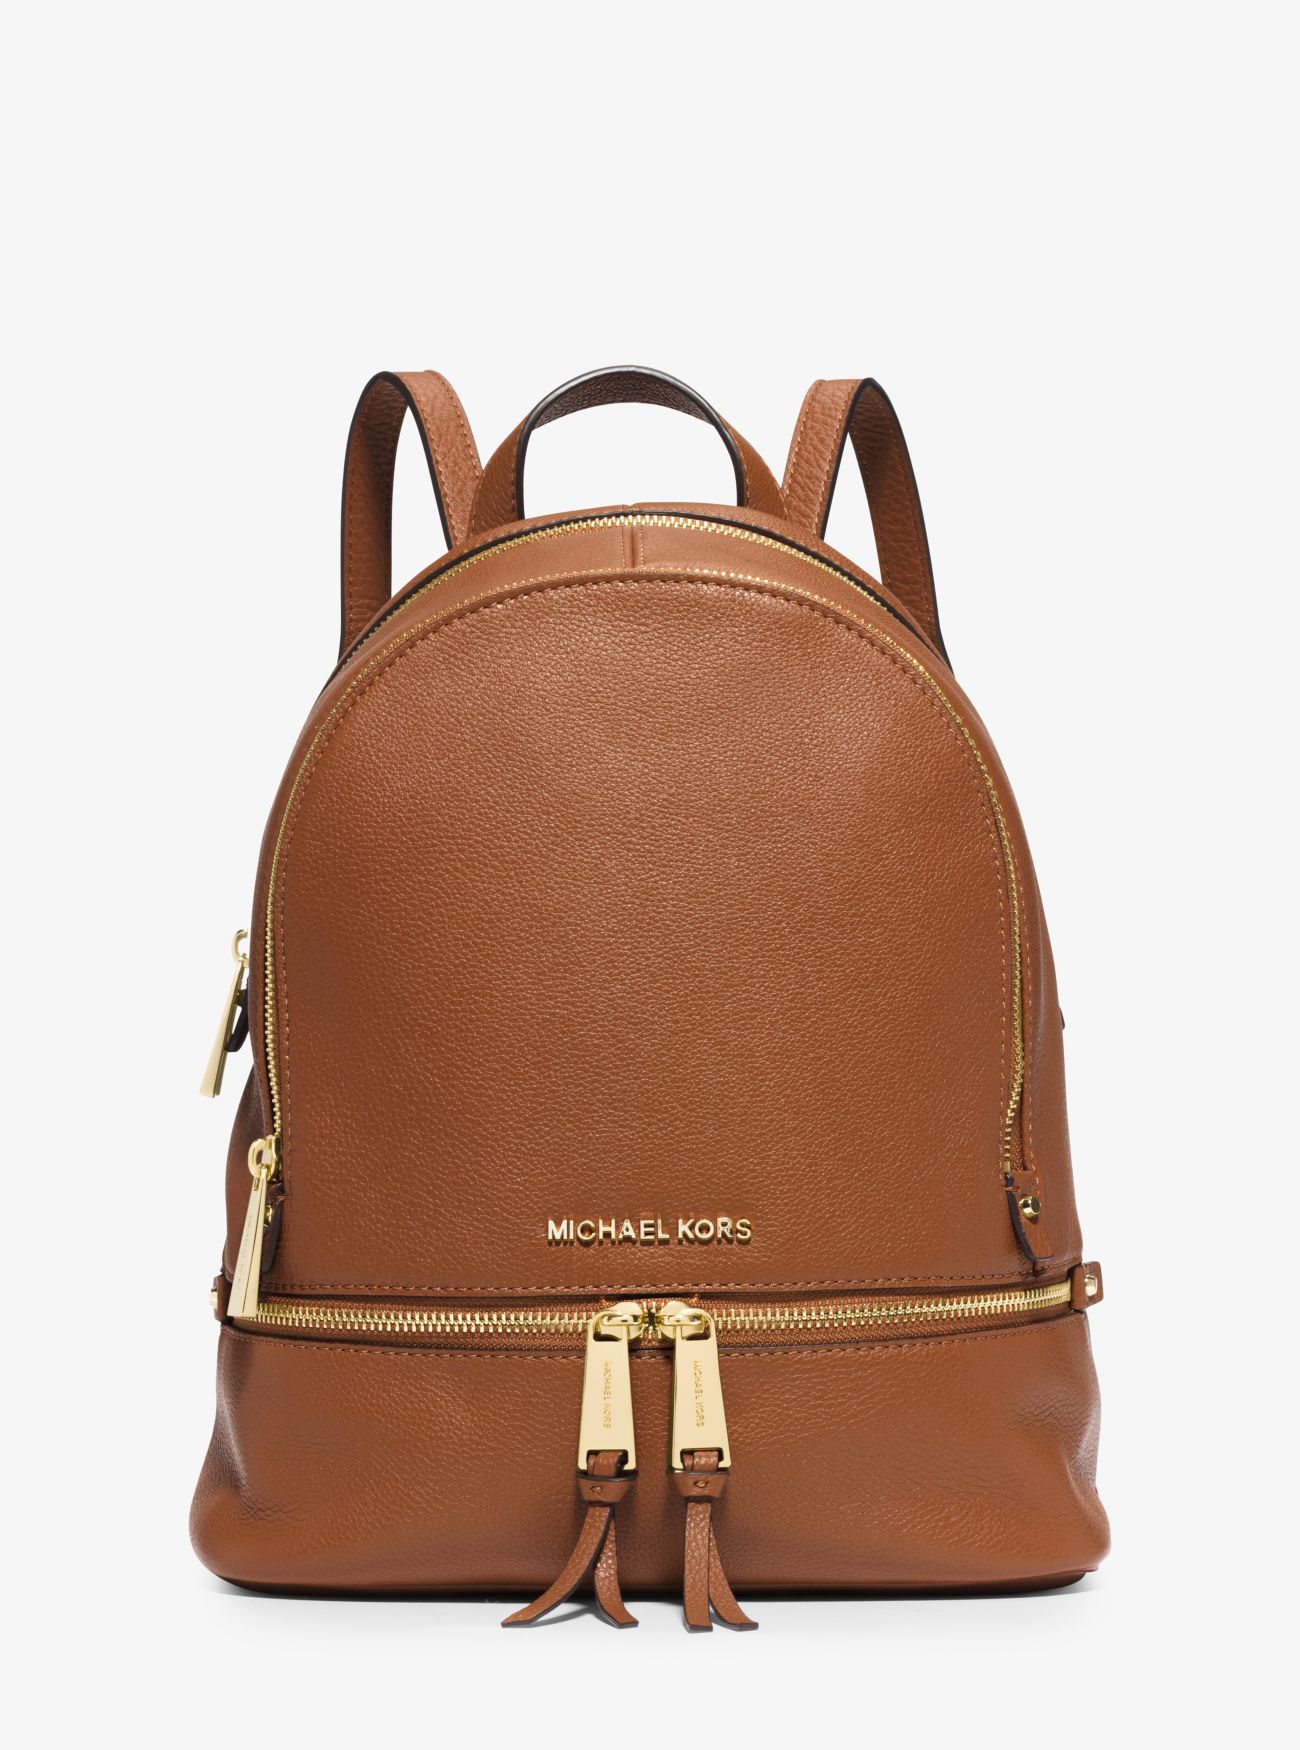 MK Rhea Medium Leather Backpack - Brown - Michael Kors